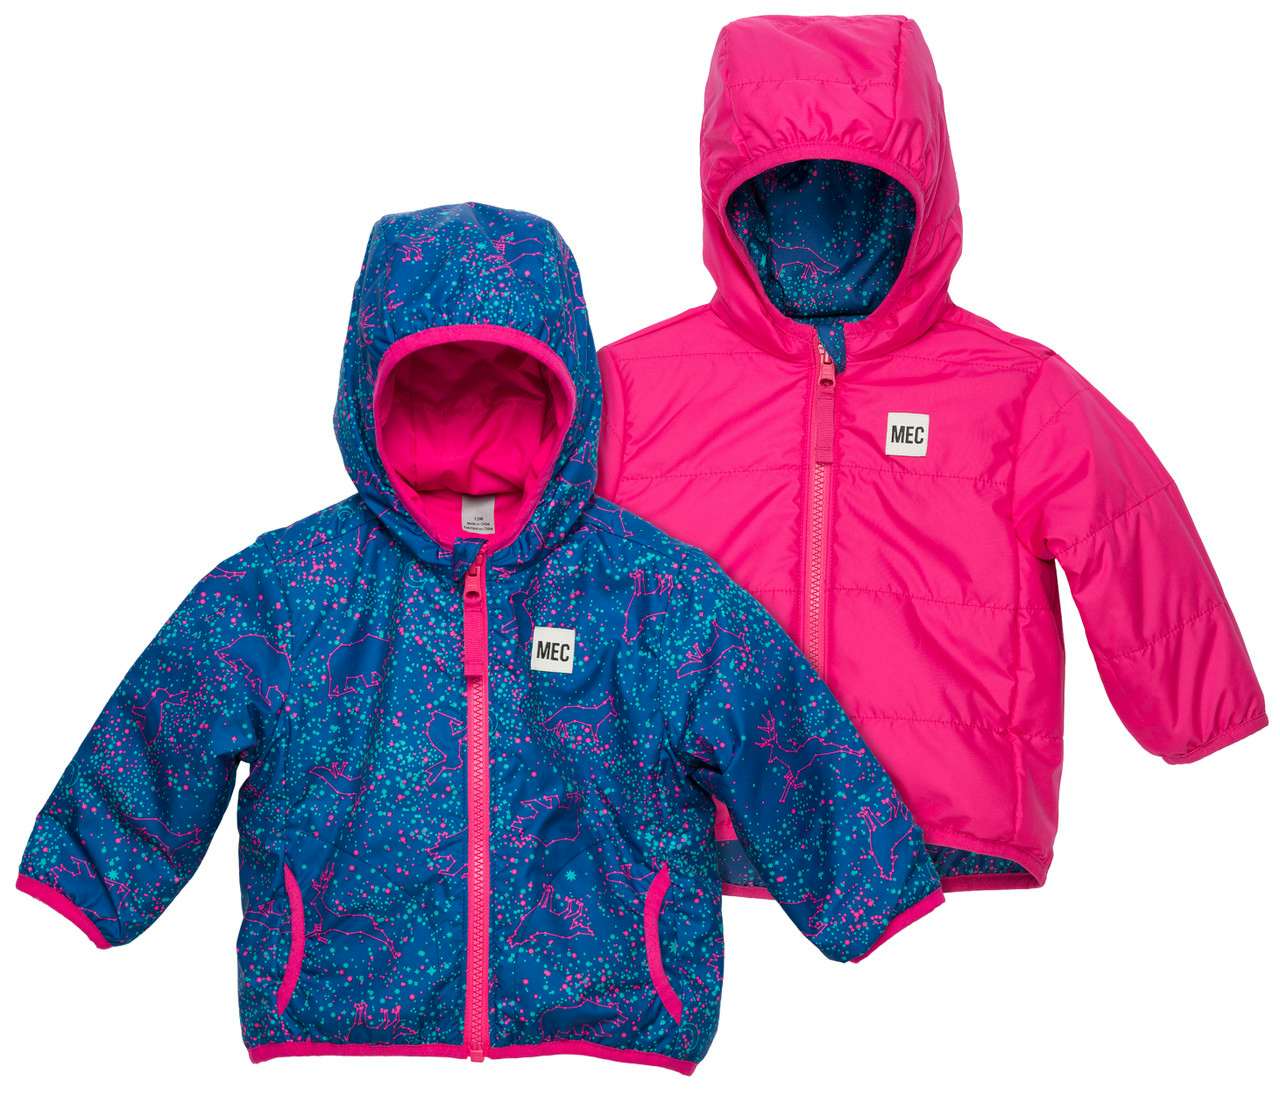 Cocoon Reversible Jacket Indigo-Mega Pink Arctic C